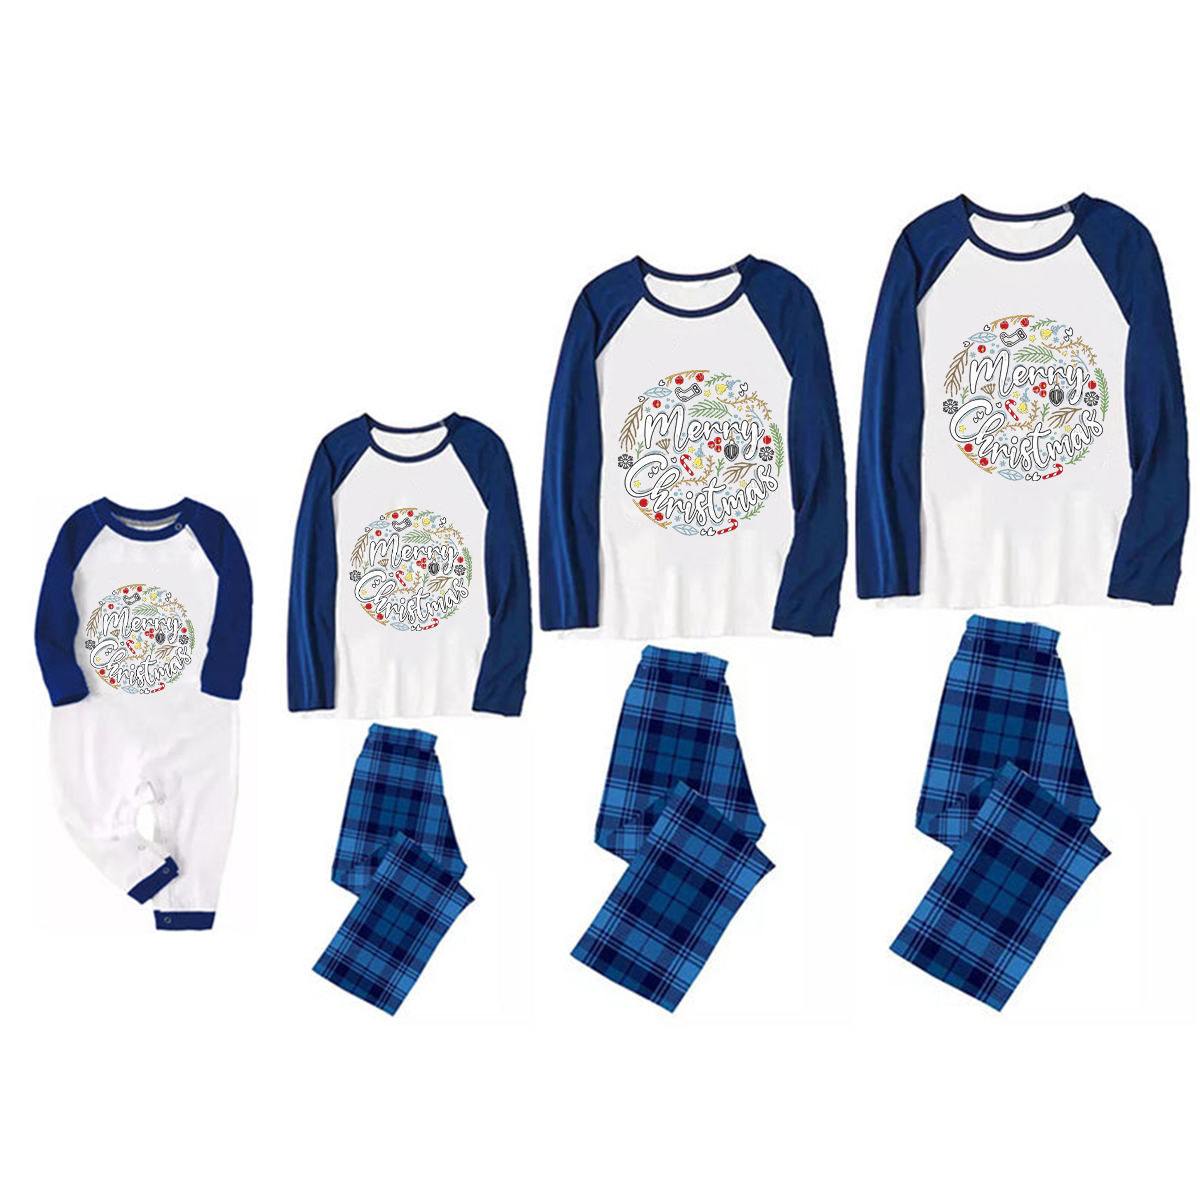 Christmas Pajamas, "Merry Christmas" letter print, patchwork top and blue plaid pants Matching Pajamas With Dog